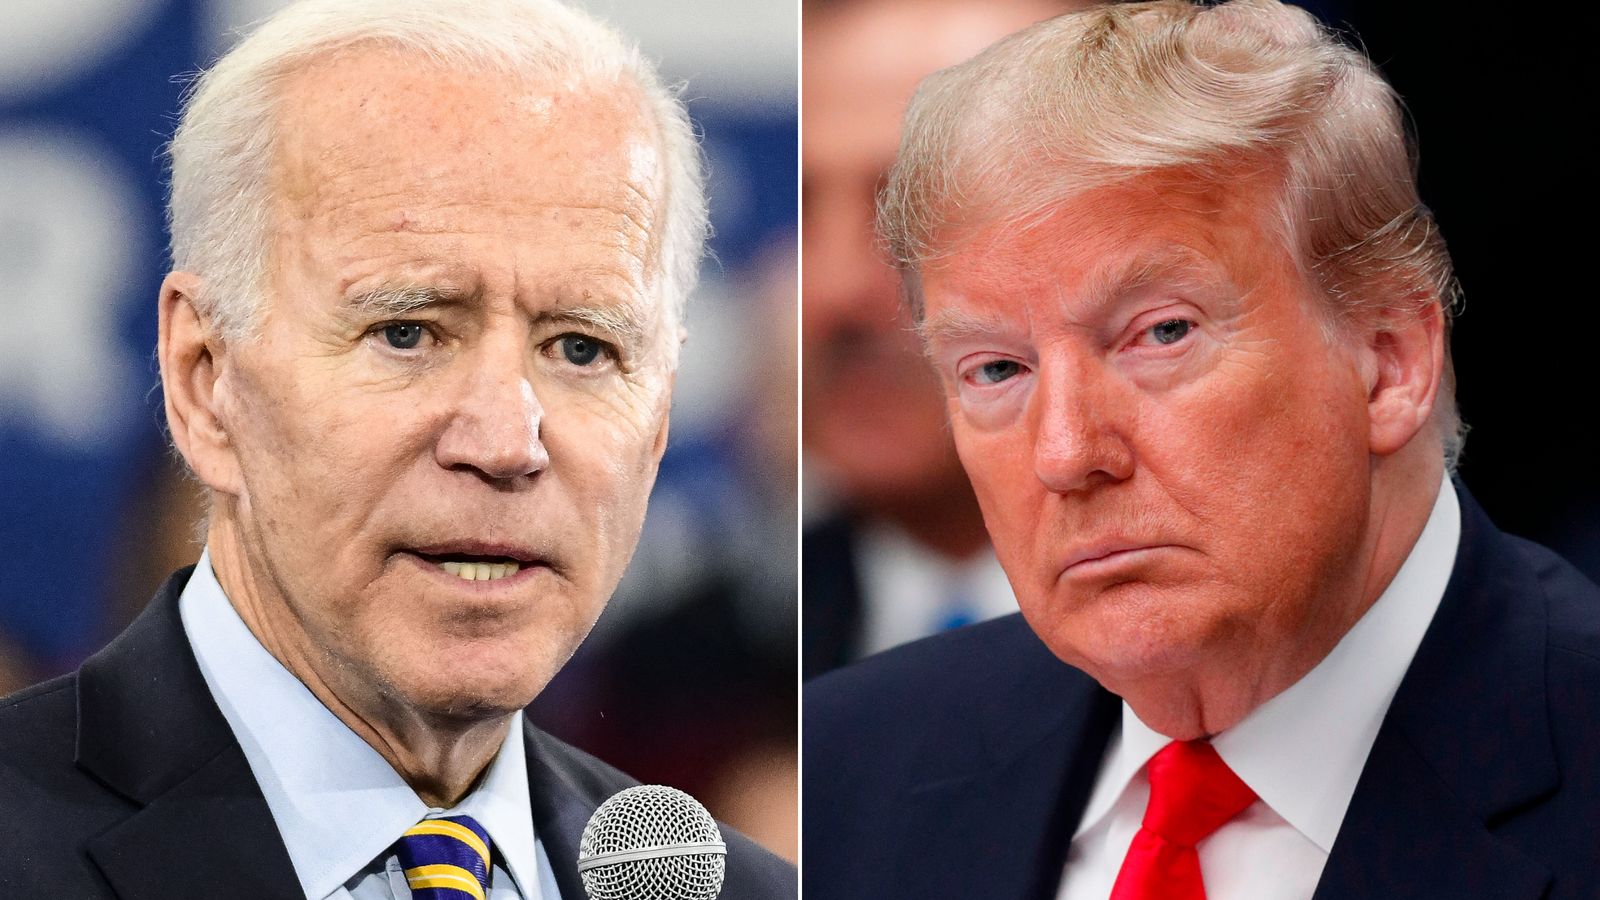 Soaked krak jord Joe Biden campaign says it will arrange call with Trump about coronavirus |  CNN Politics